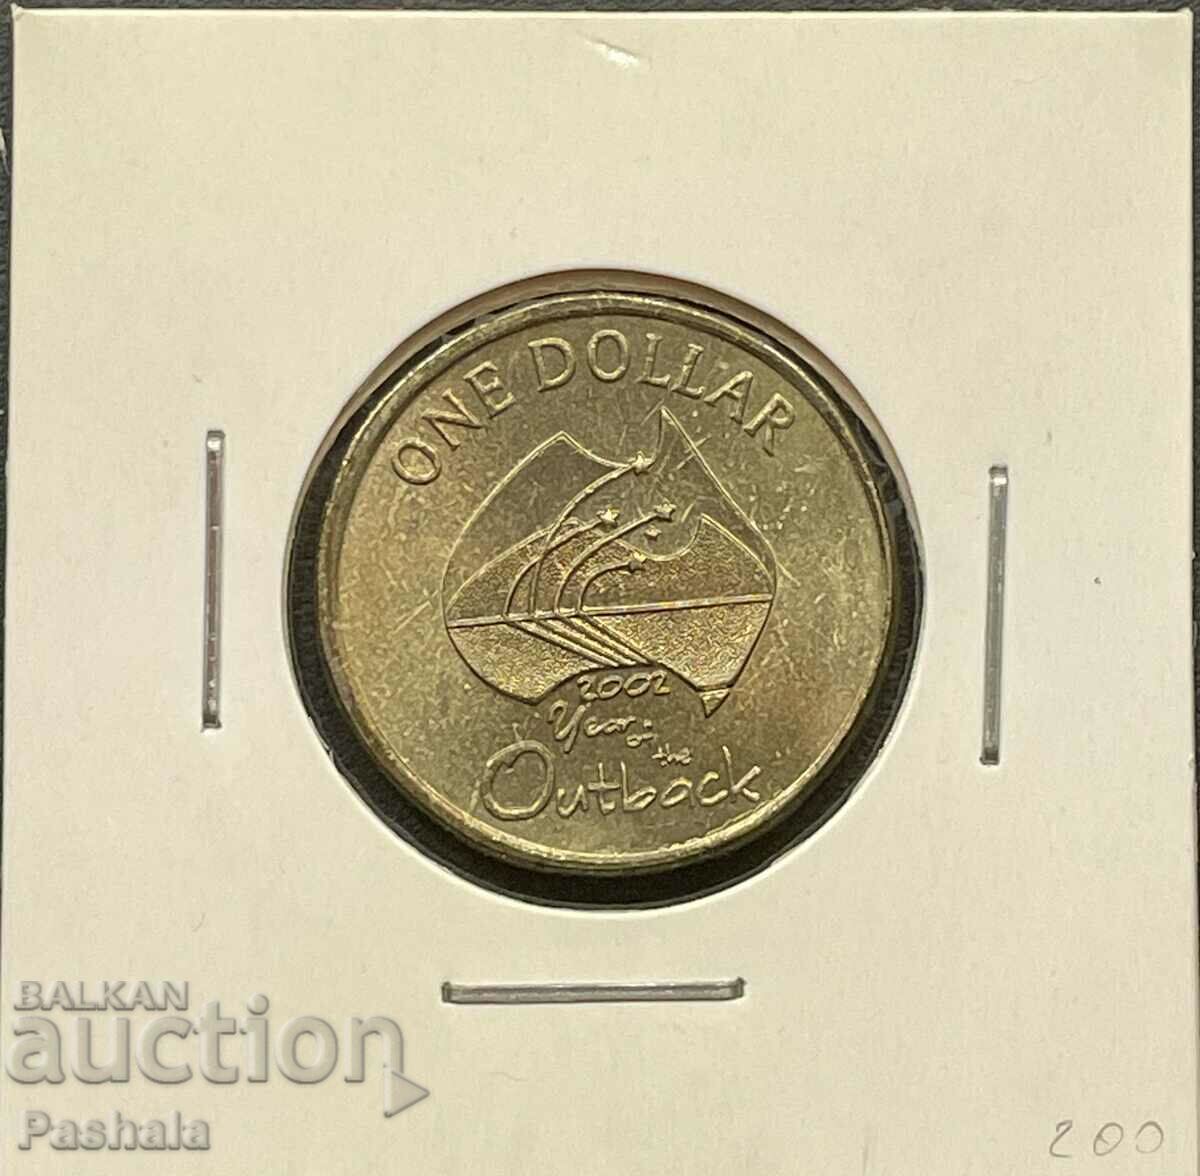 Australia 1 USD 2002